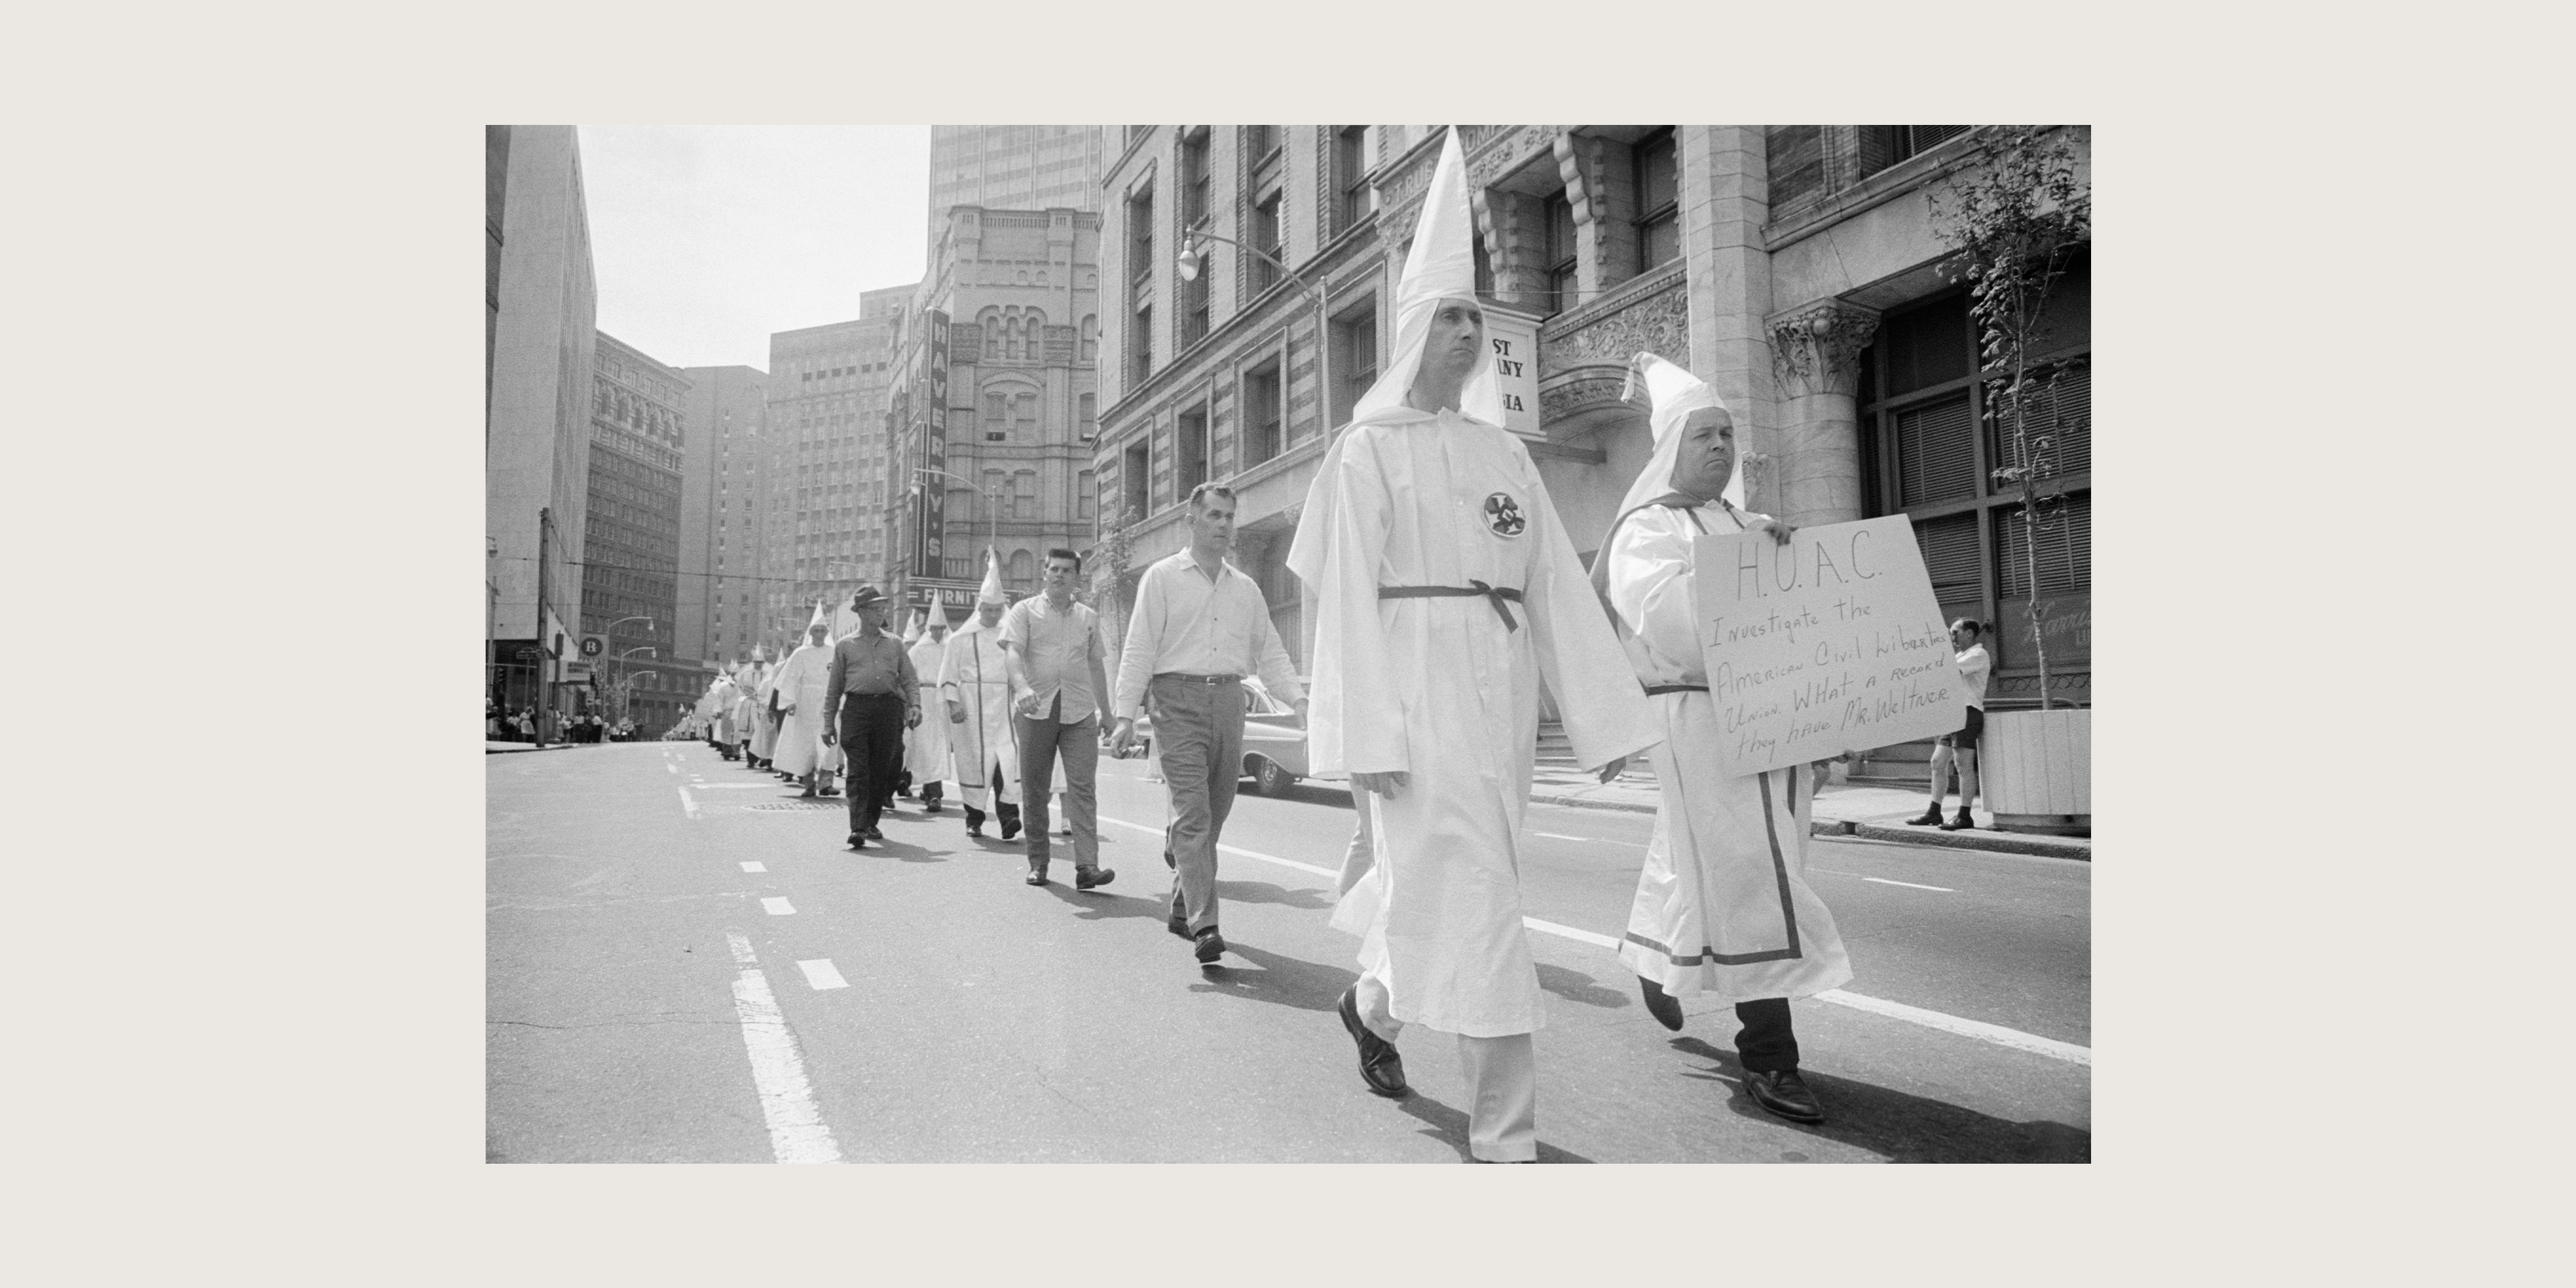 the KKK marching